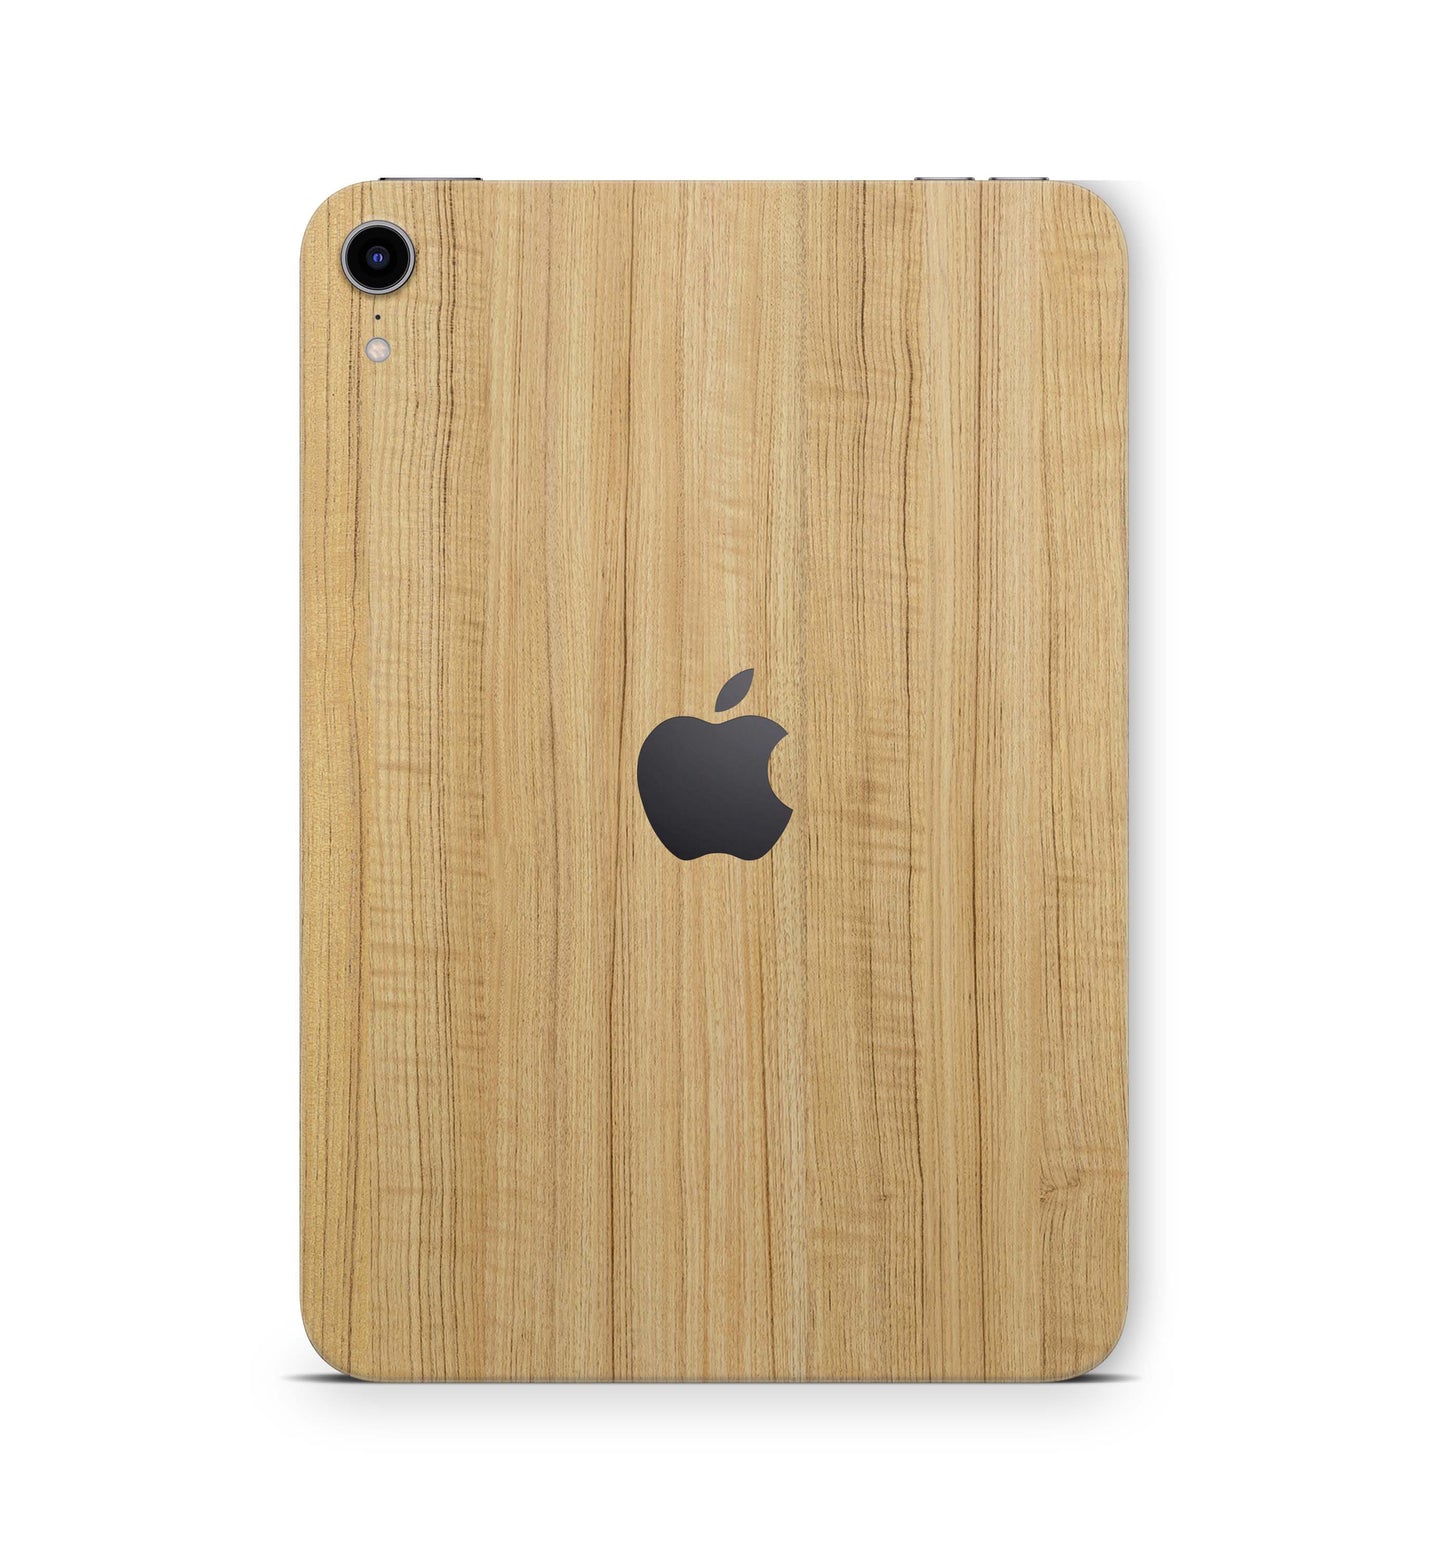 Apple iPad Skin Design Cover Folie Vinyl Skins & Wraps für alle iPad Modelle Aufkleber Skins4u Eiche  